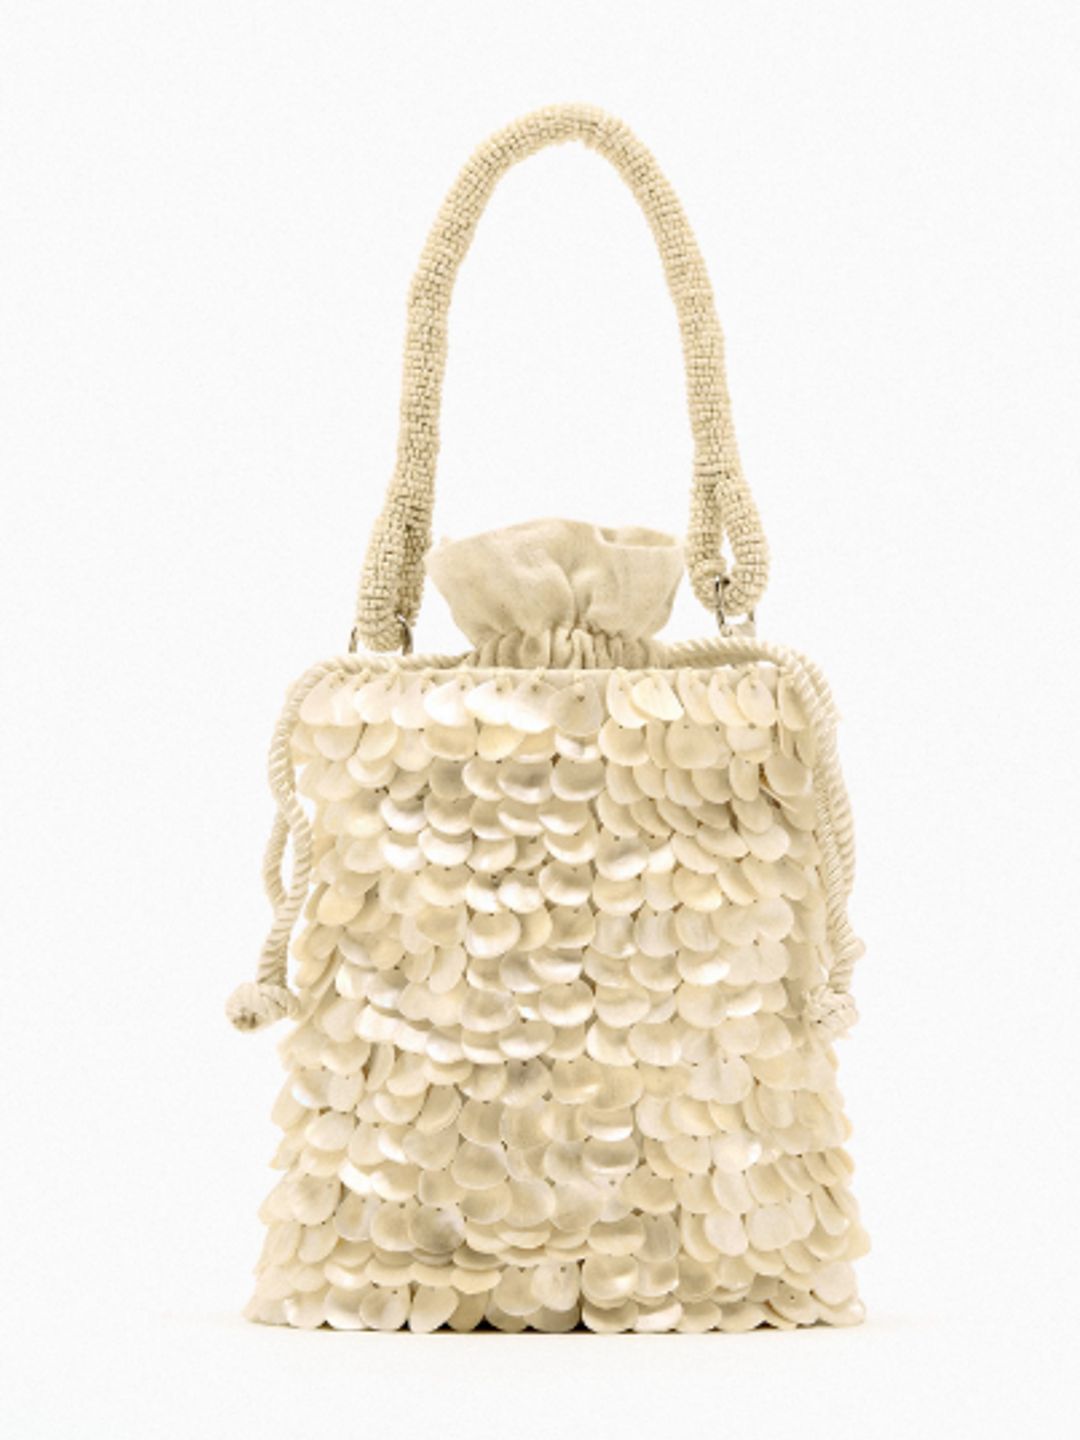 Zara shell-encrusted bag 